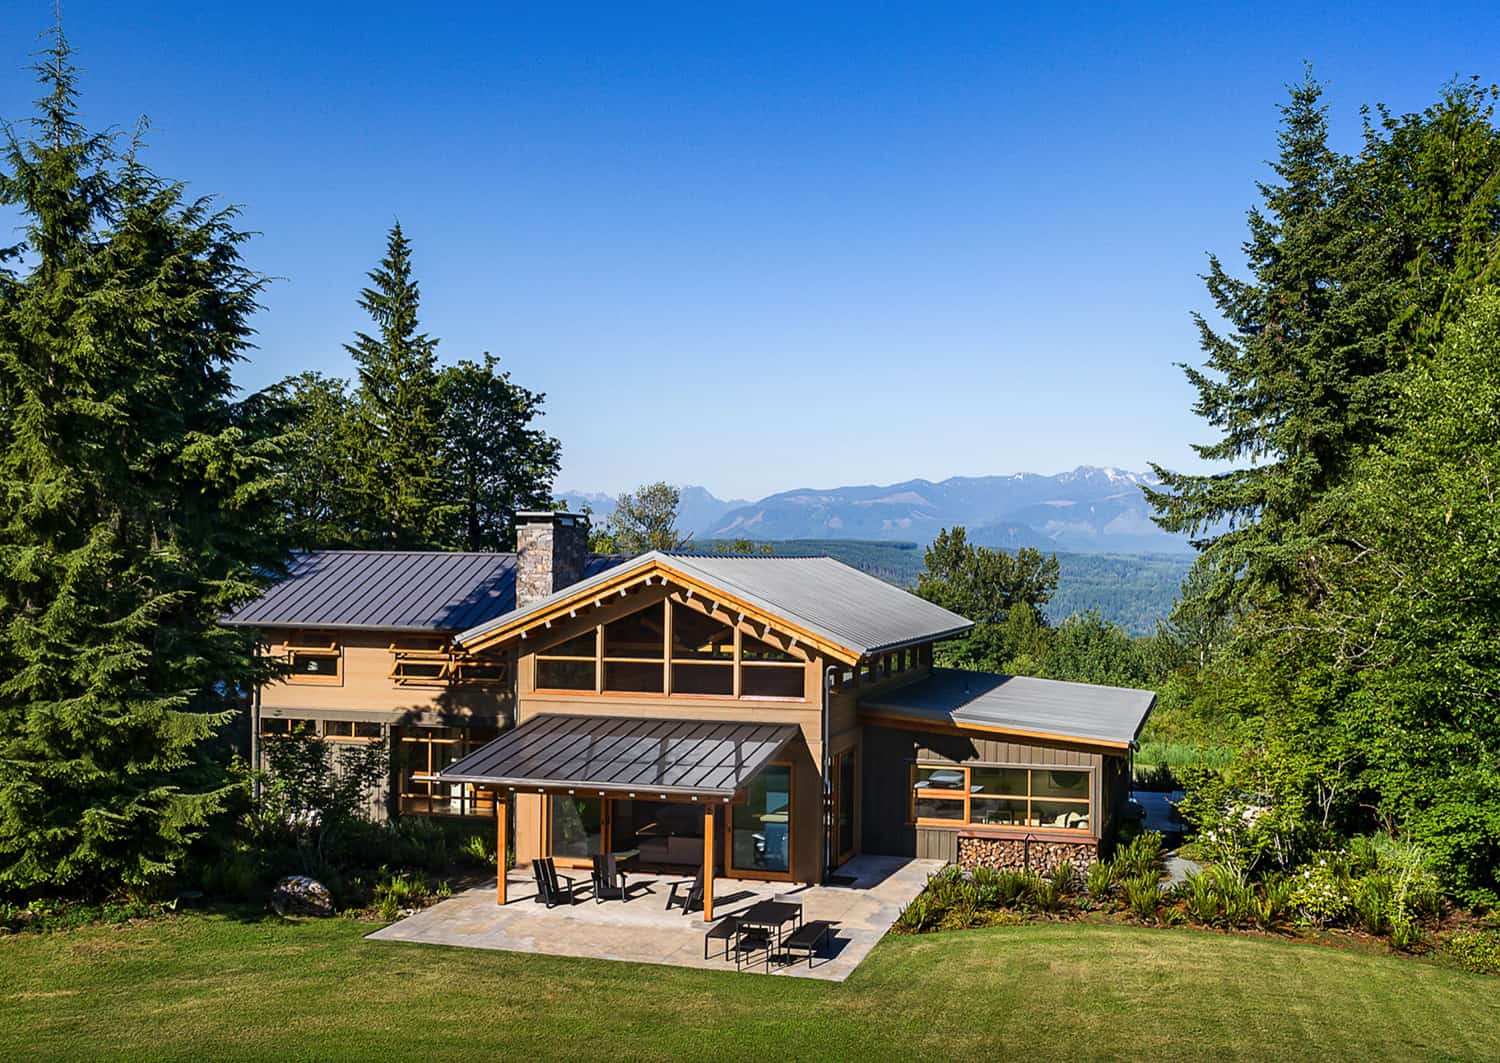 This warm and inviting Washington home has stunning mountain views